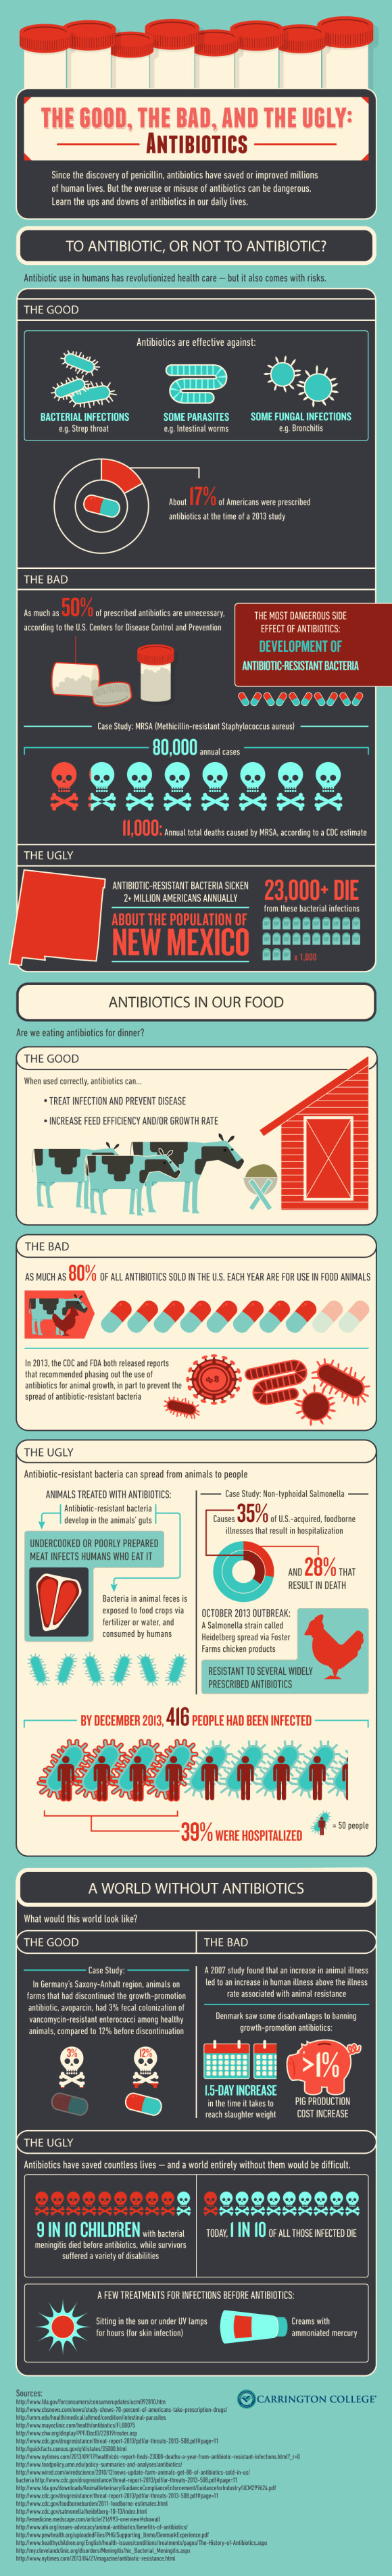 Antibiotics: The Wonderful And Terrible Truth Infographic